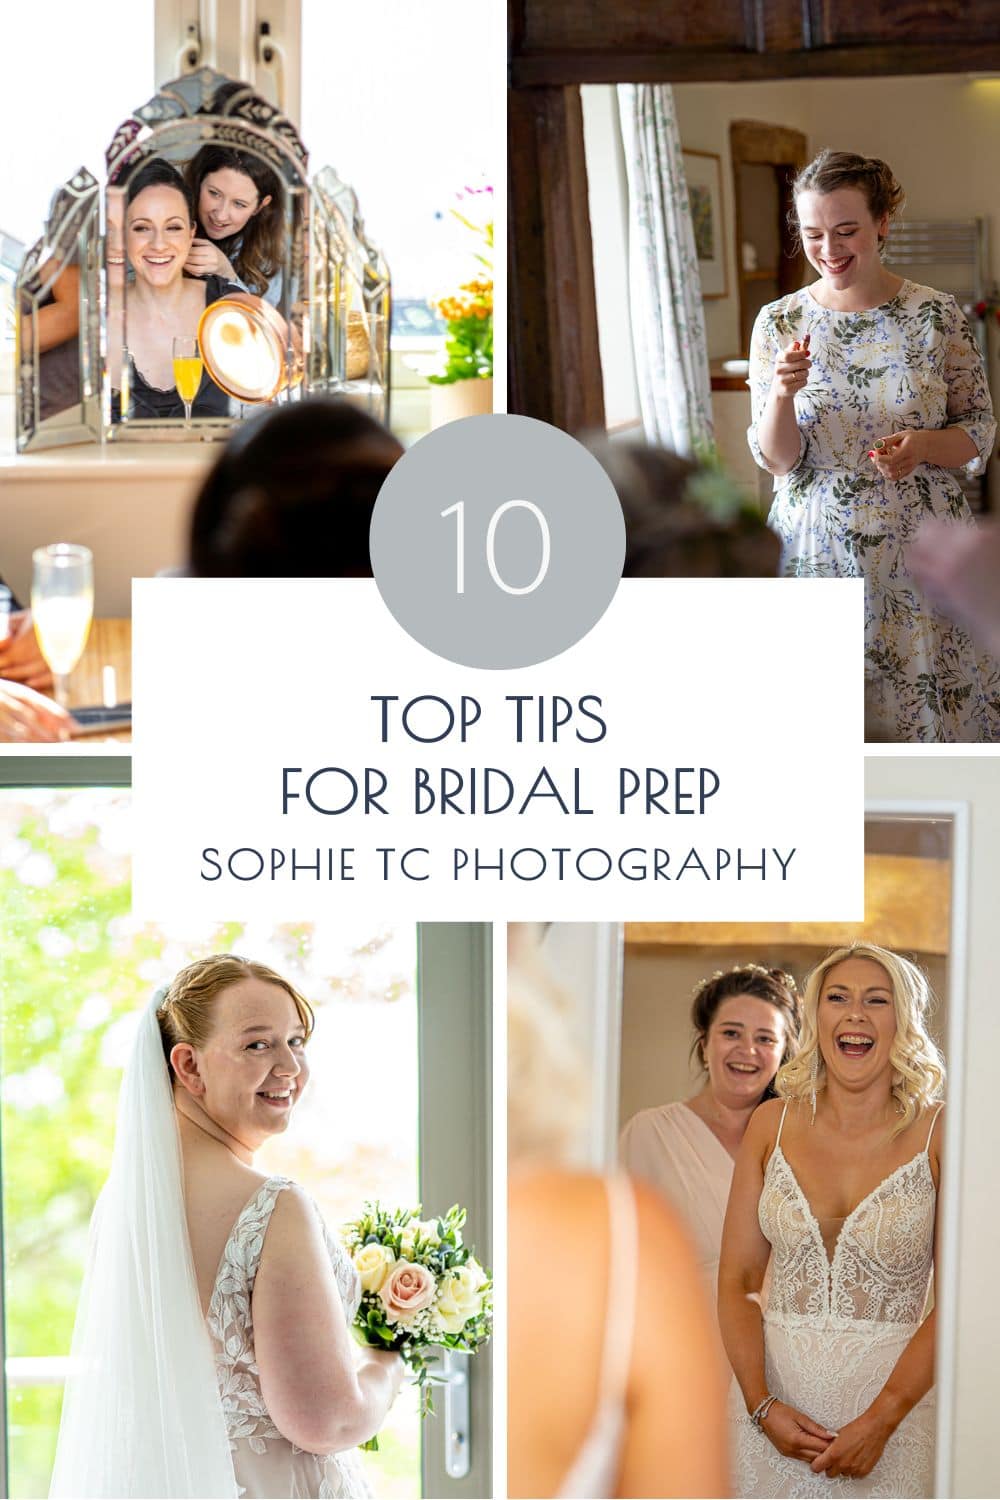 10 Top tips for bridal prep